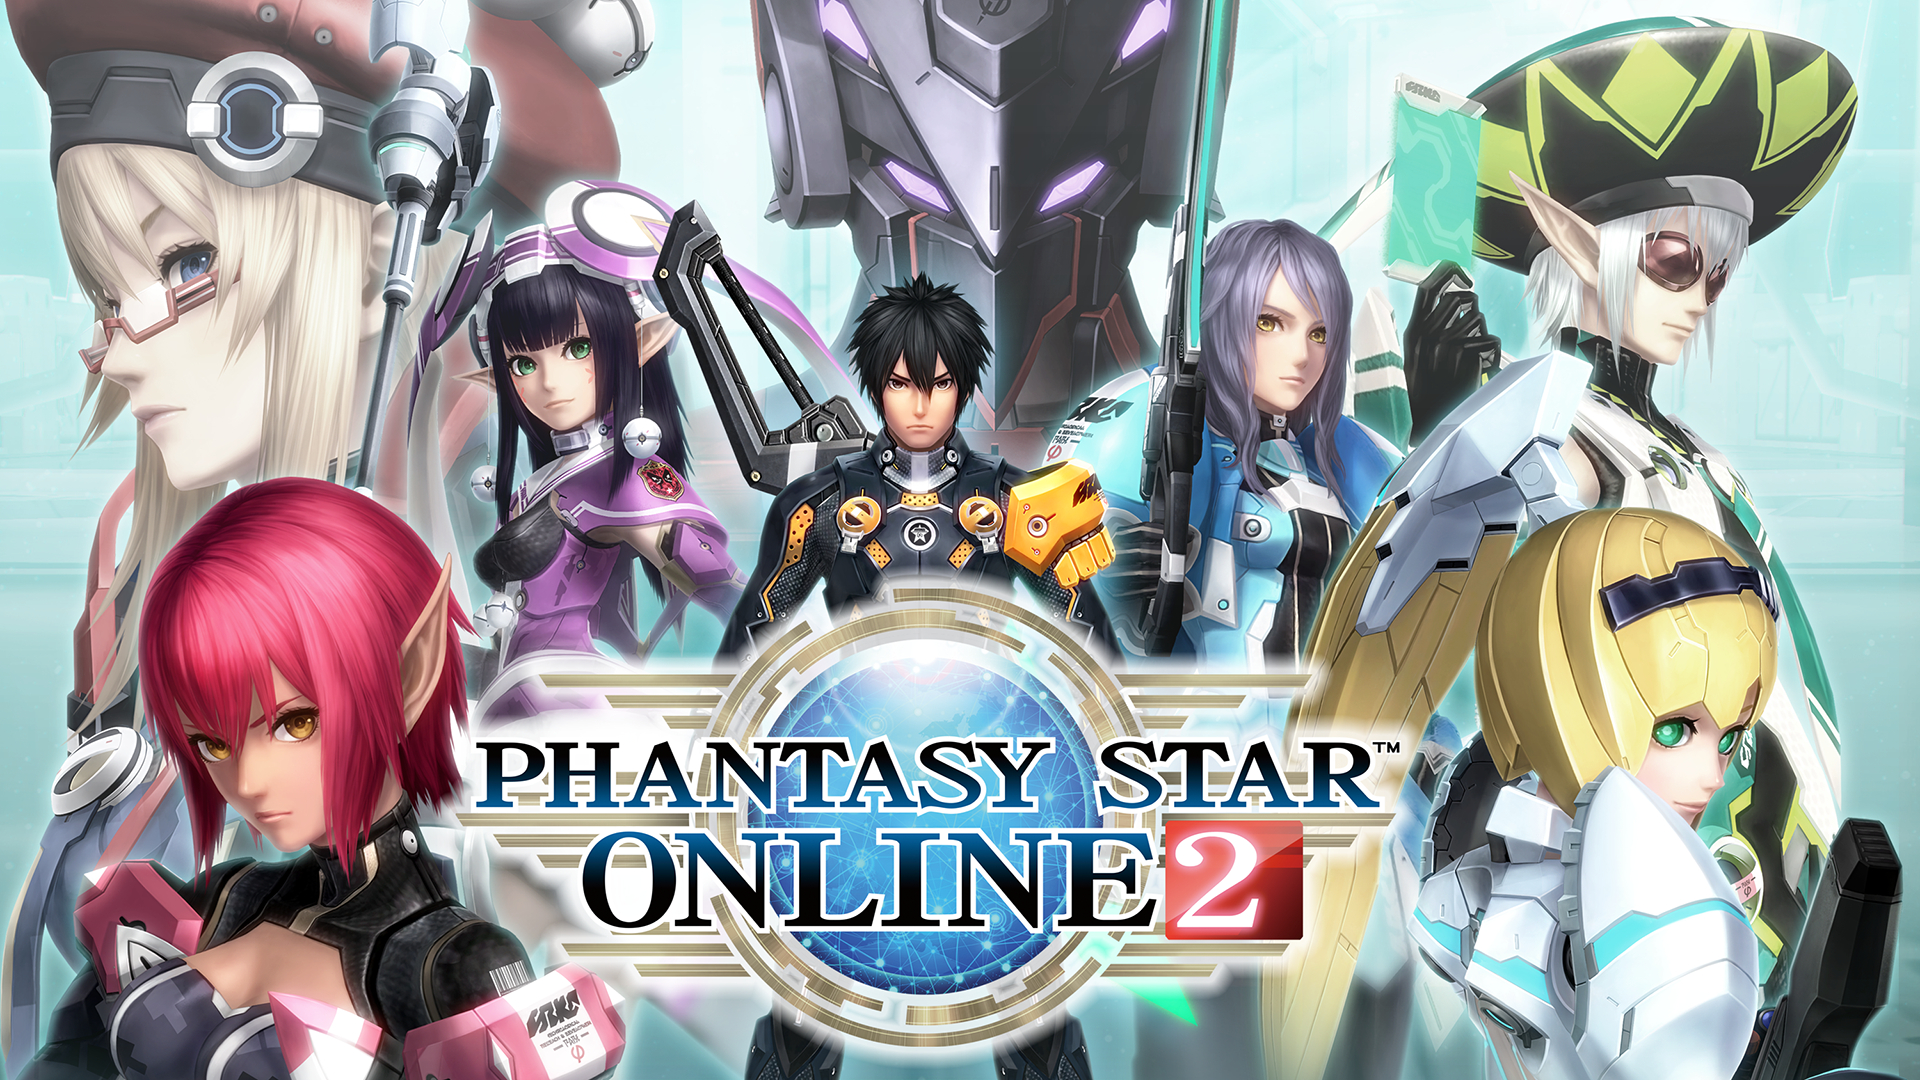 Phantasy Star Online 2 Anime Announced, More Merch Coming